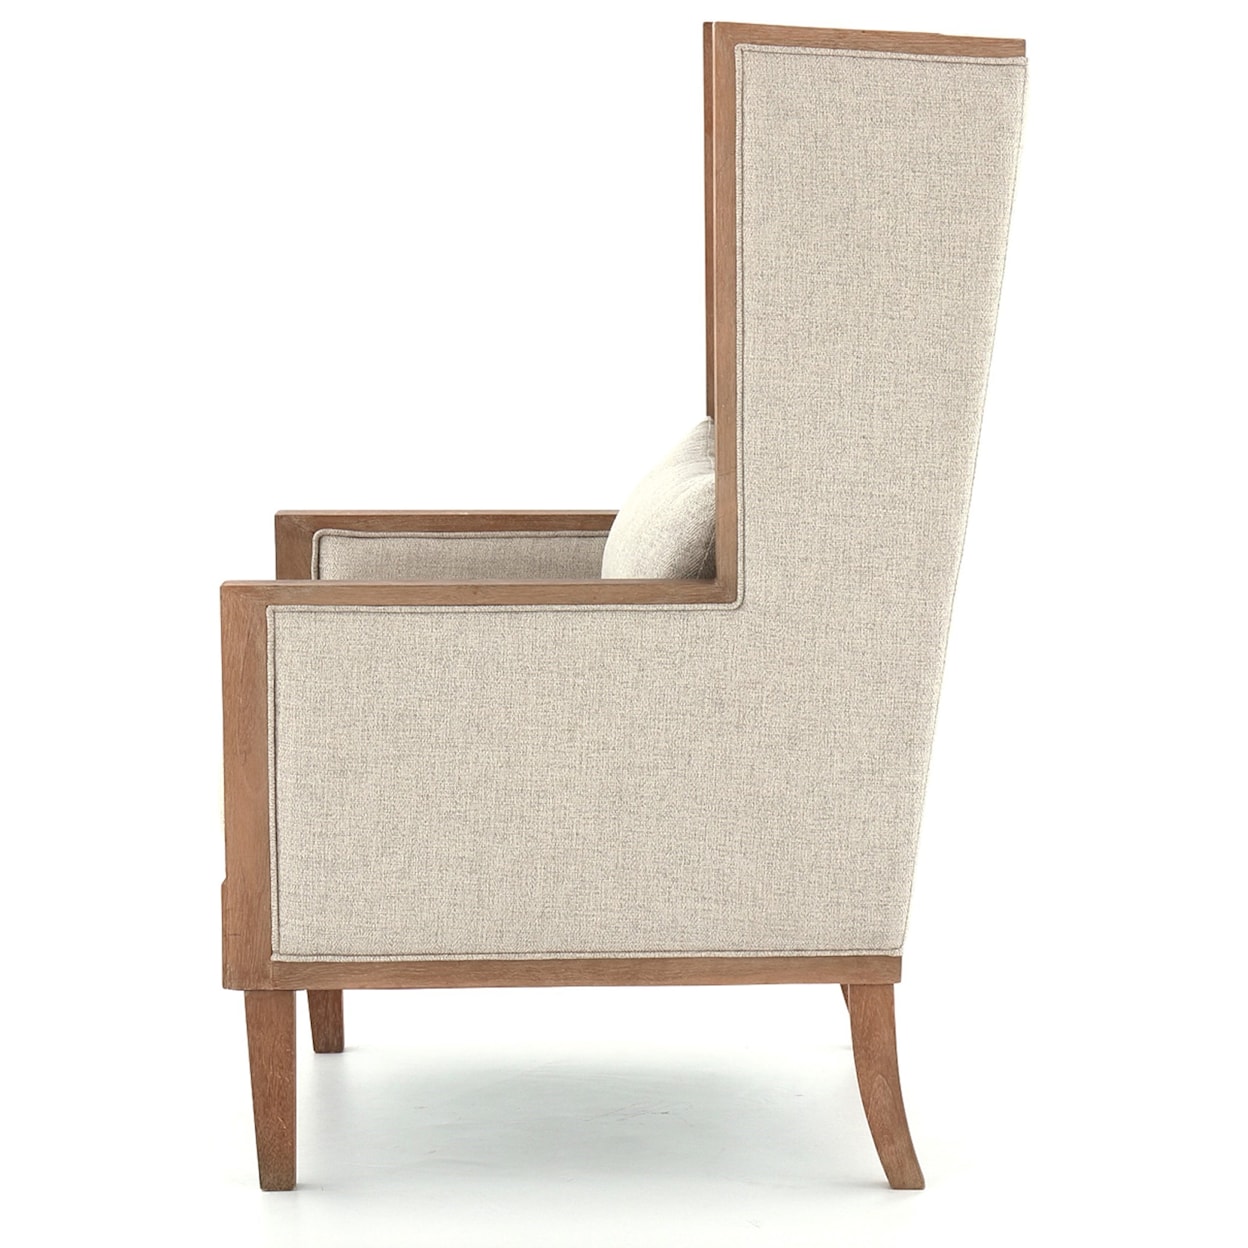 Benchcraft Avila Accent Chair